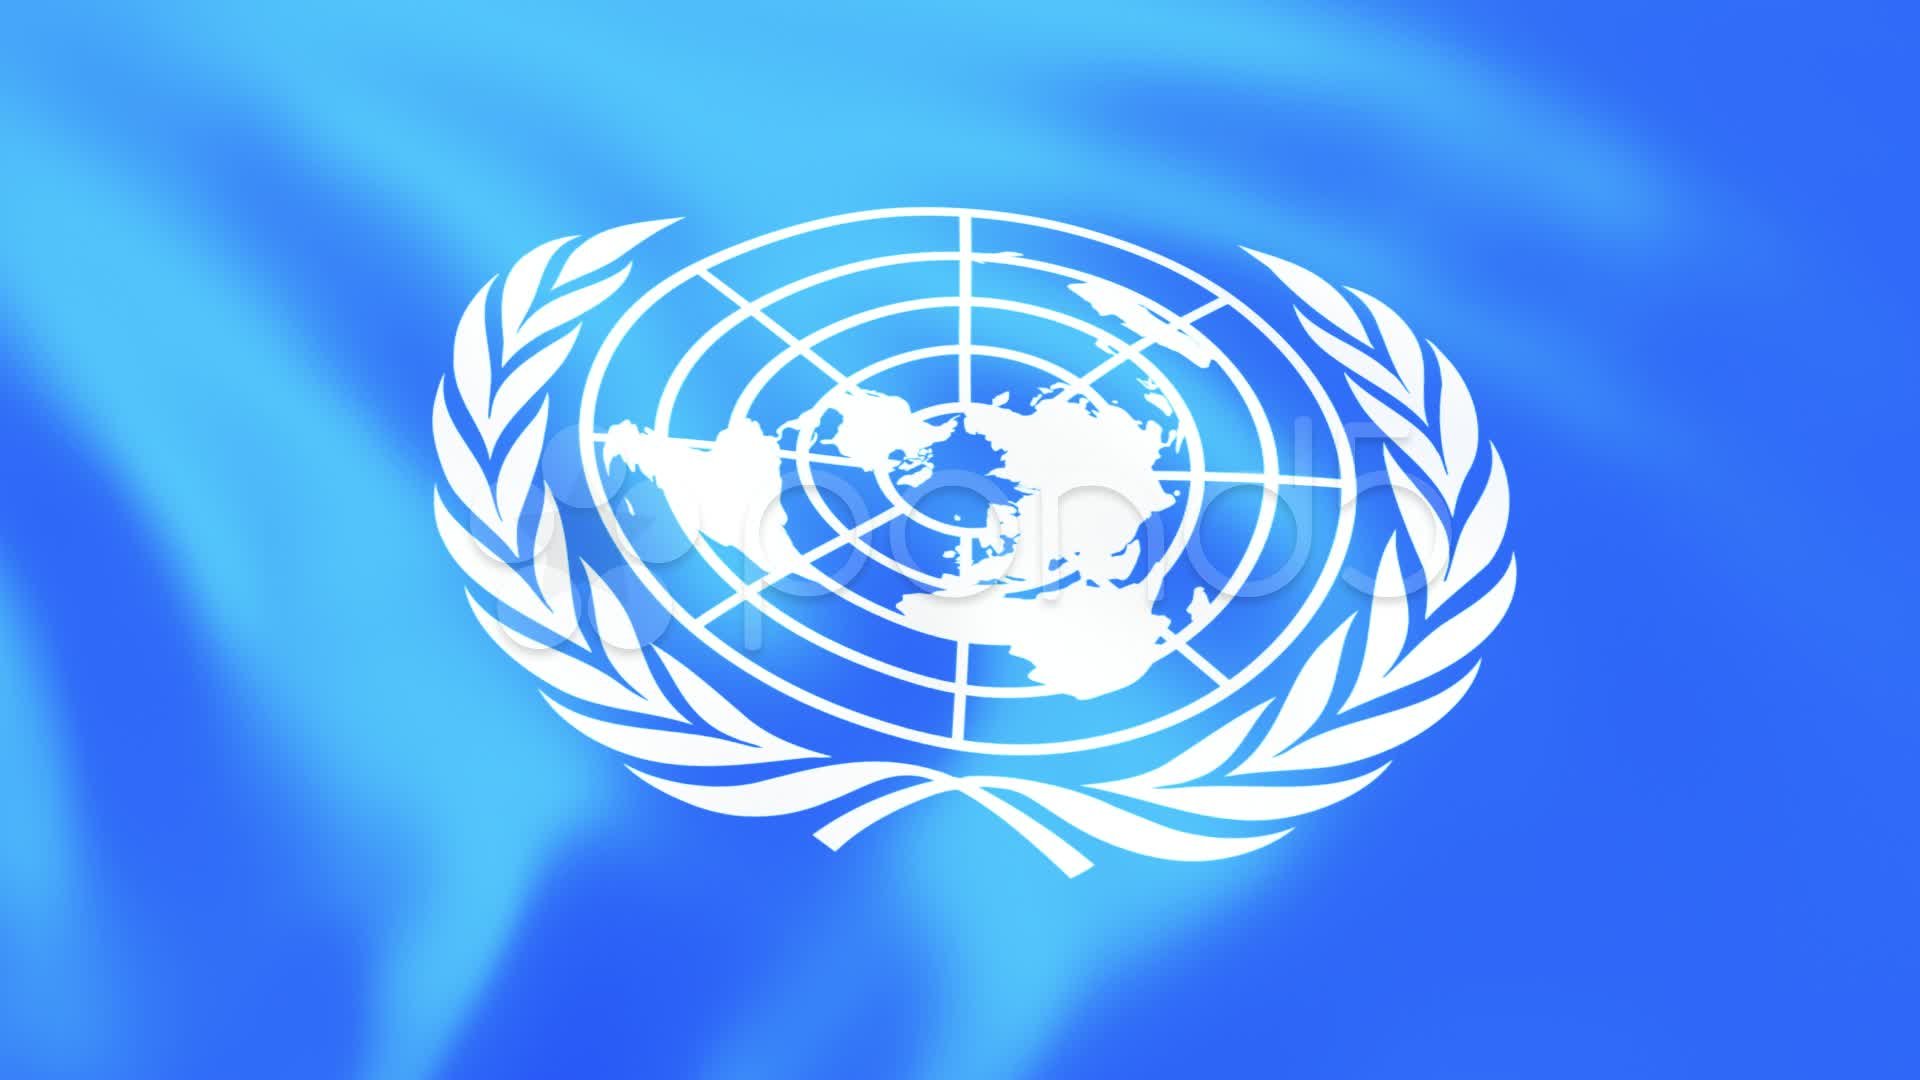 3314 оон. Контртеррористический комитет ООН. Контртеррористический комитет совета безопасности ООН. Флаг ООН. Совет безопасности ООН флаг.